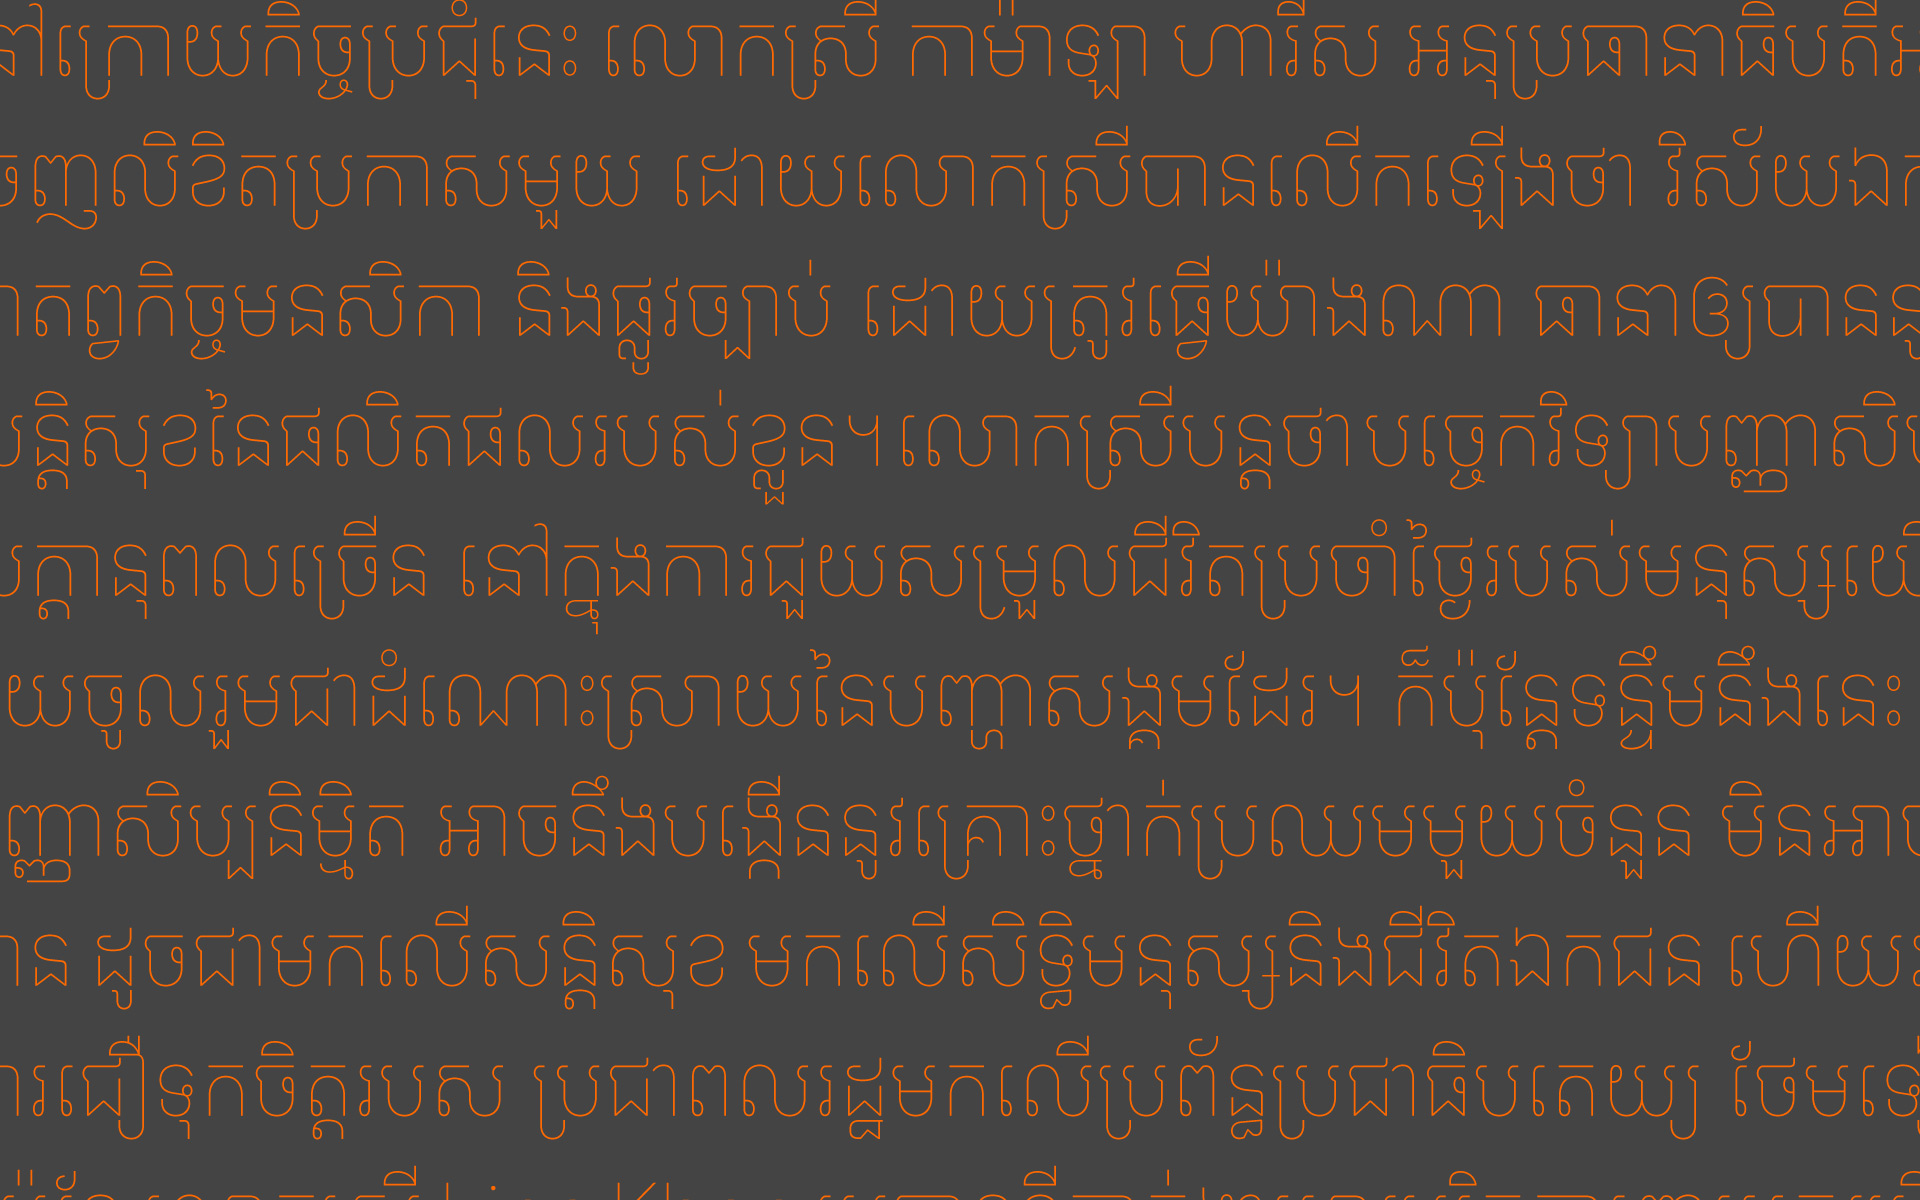 MiSans-Khmer-Typeface-Design-13.1